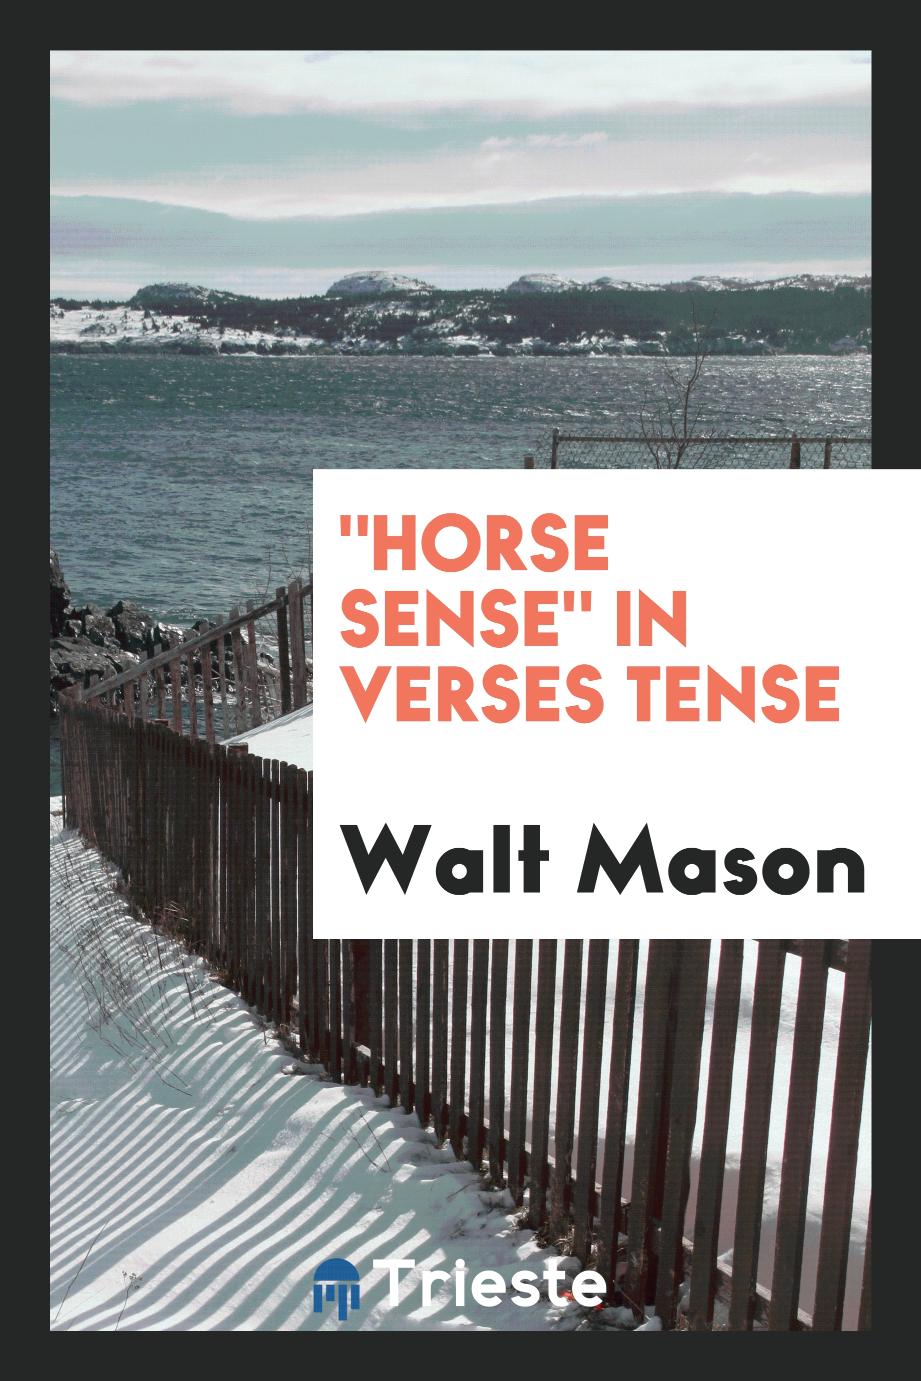 "Horse sense" in verses tense